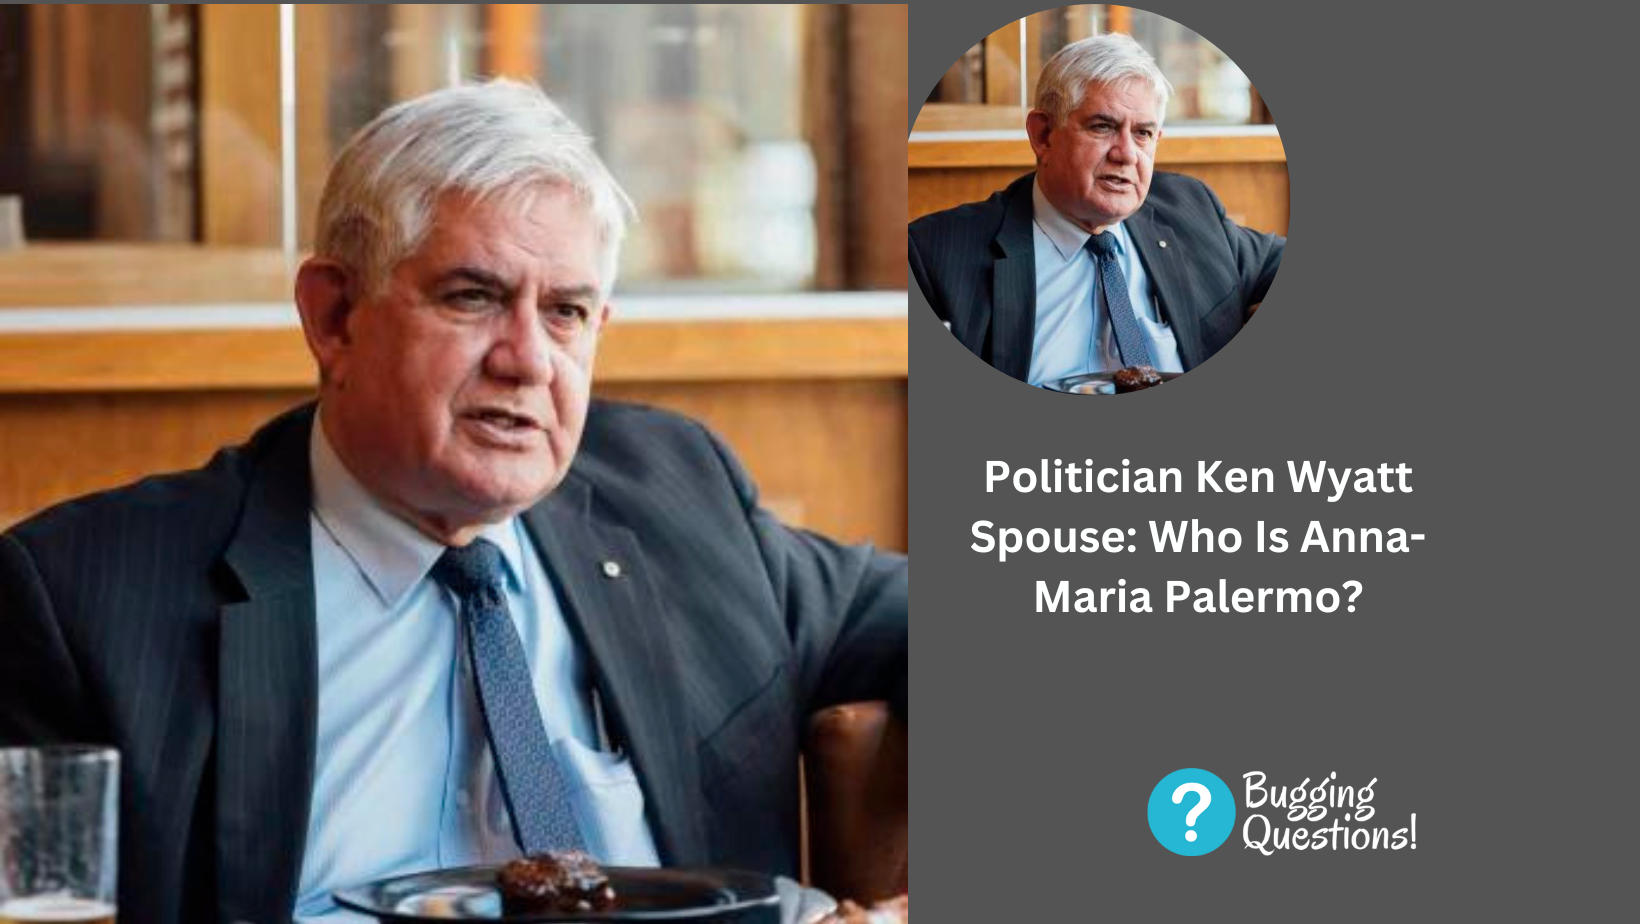 Politician Ken Wyatt Spouse: Who Is Anna-Maria Palermo?